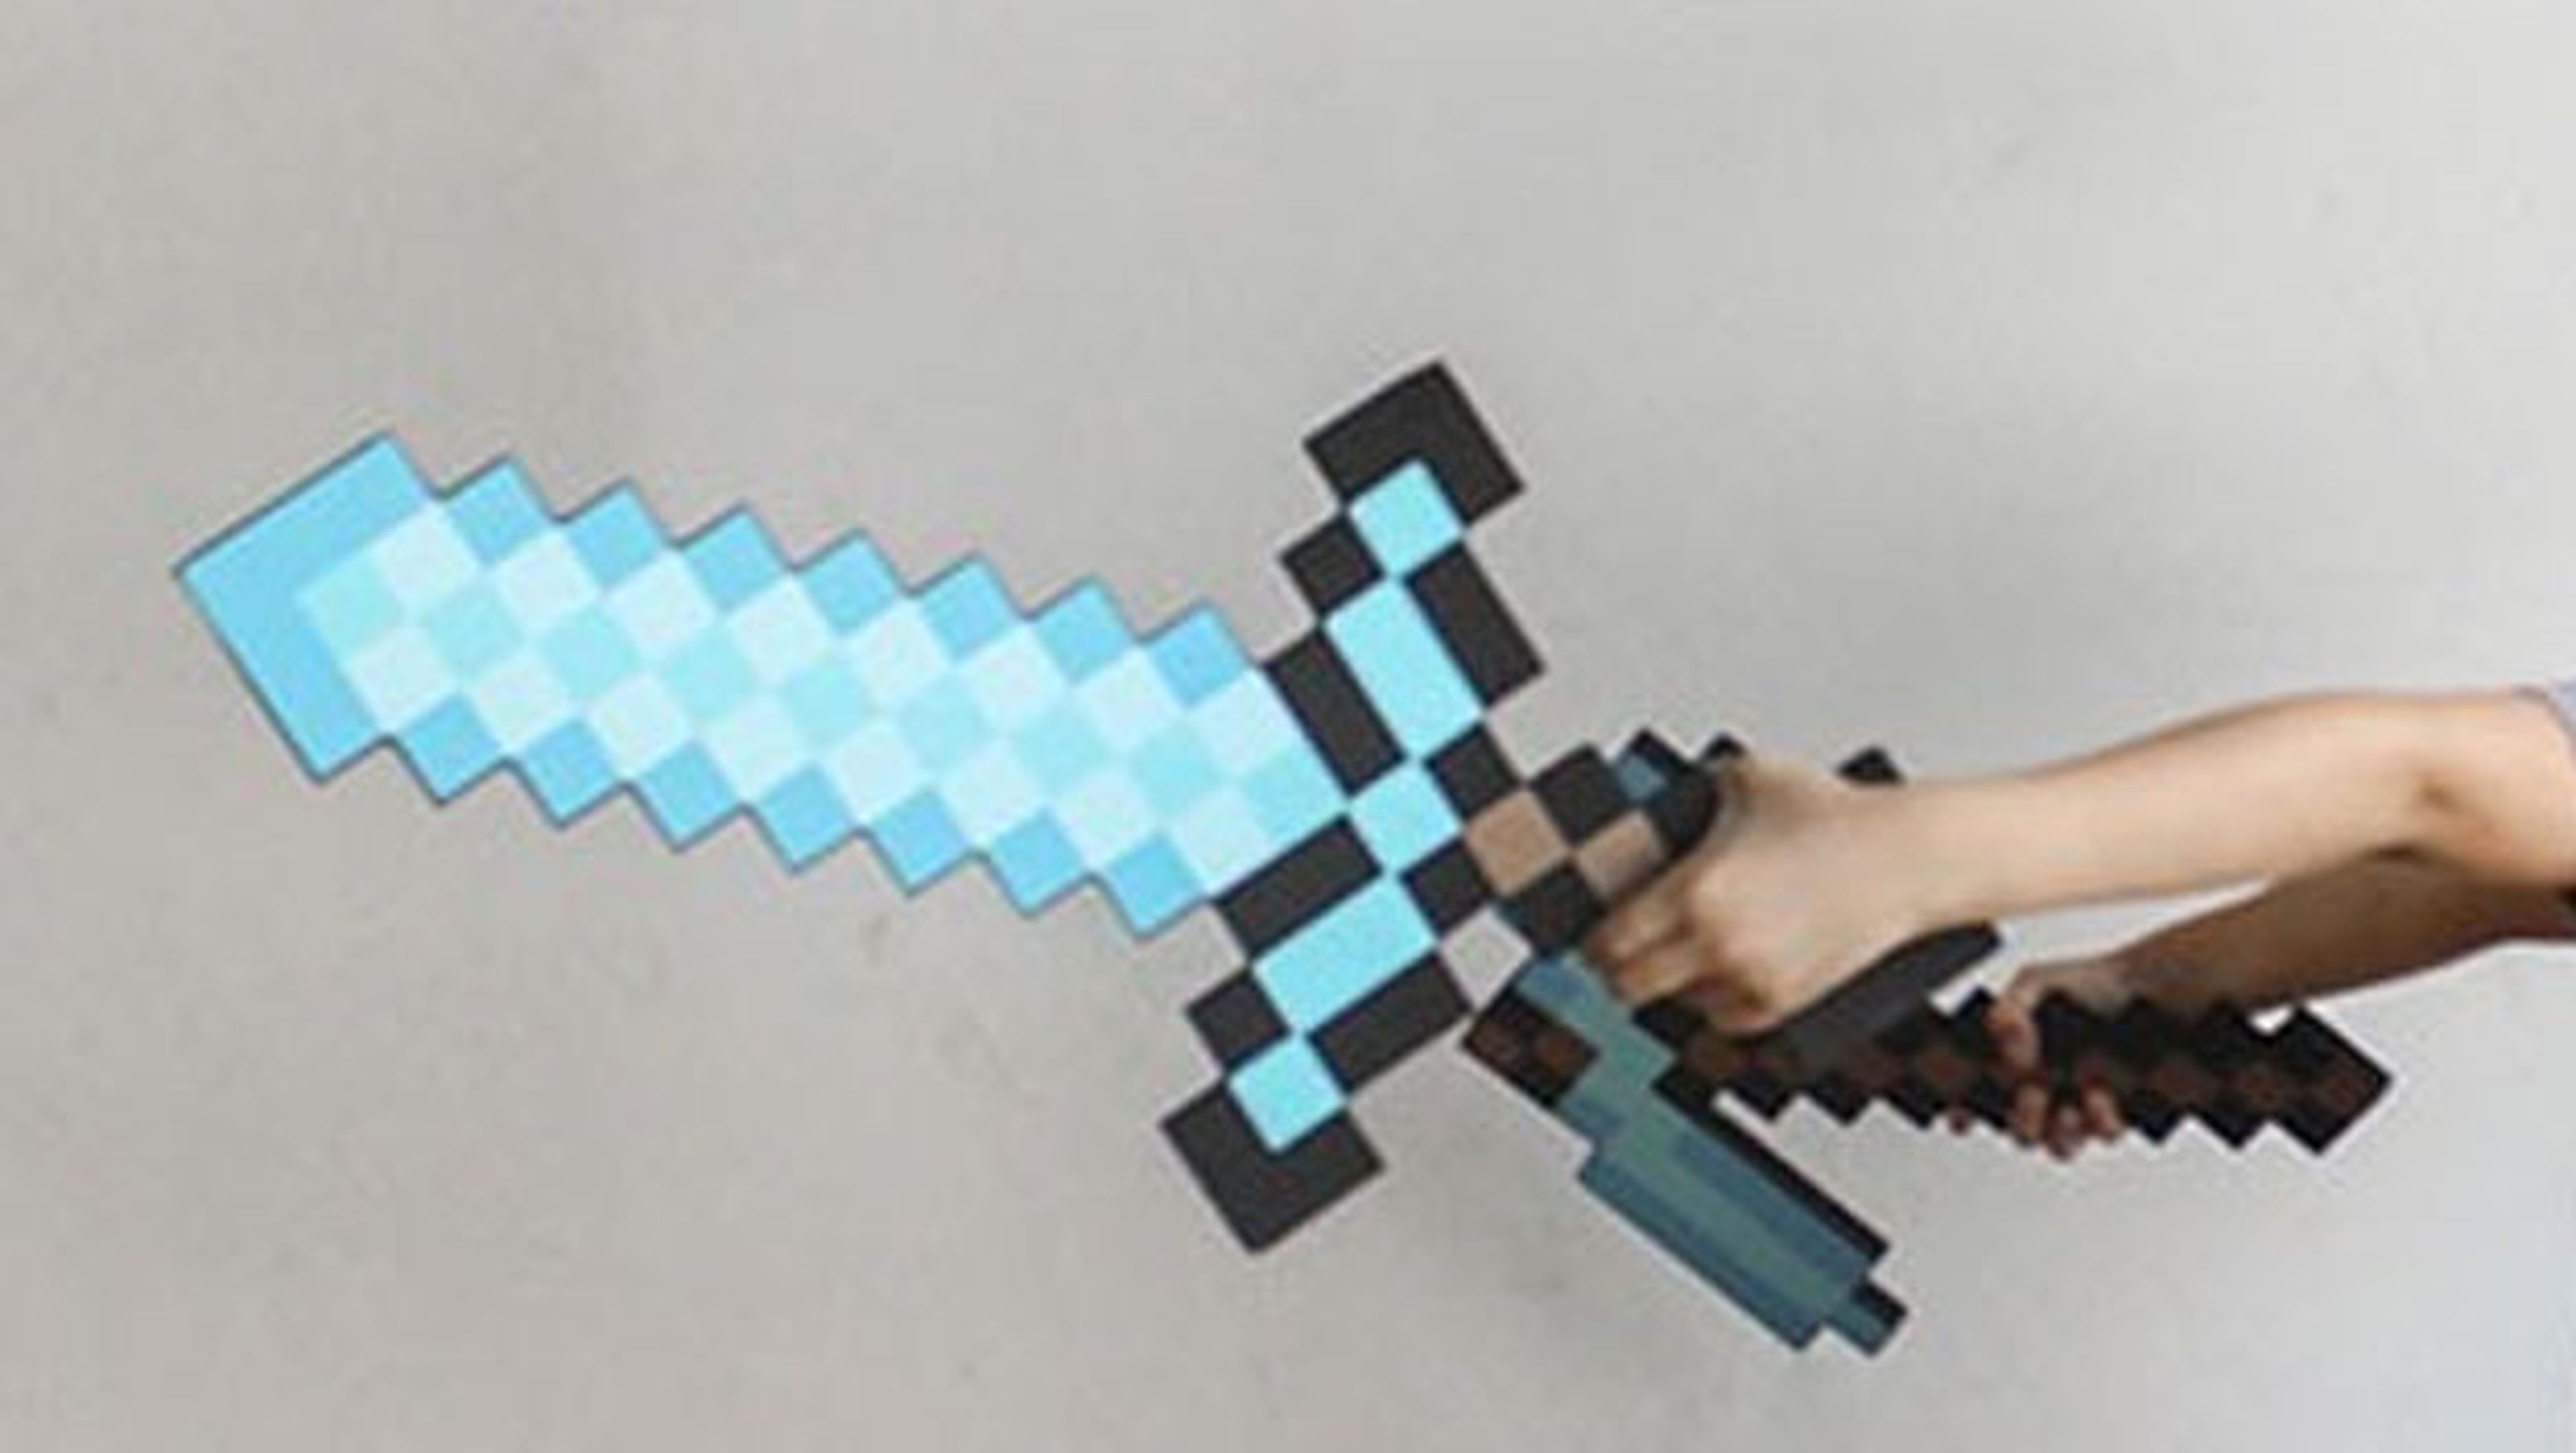 Espada de Minecraft